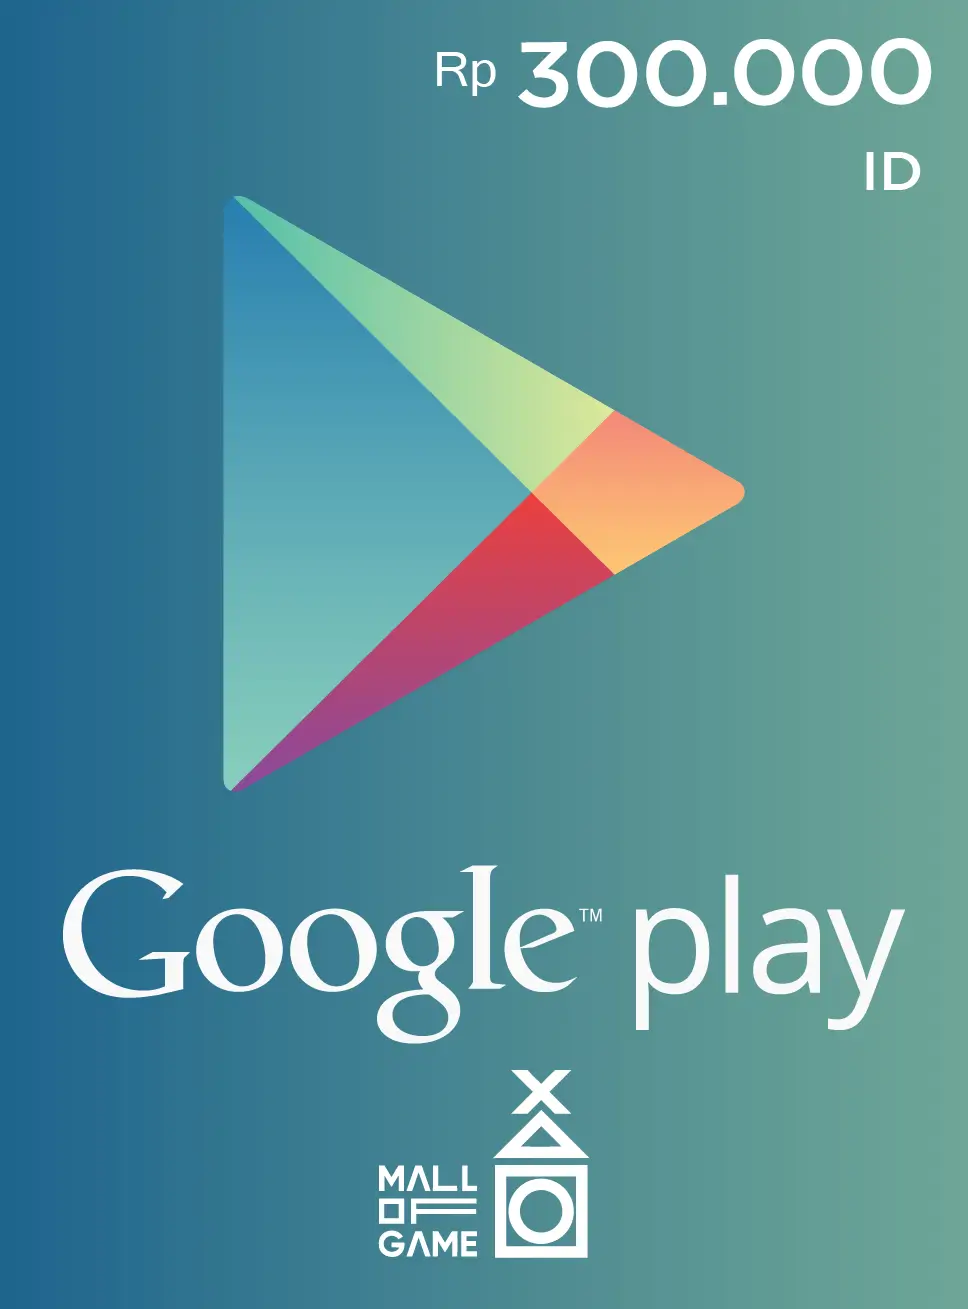 Google Play IDR300,000 Gift Card (ID)